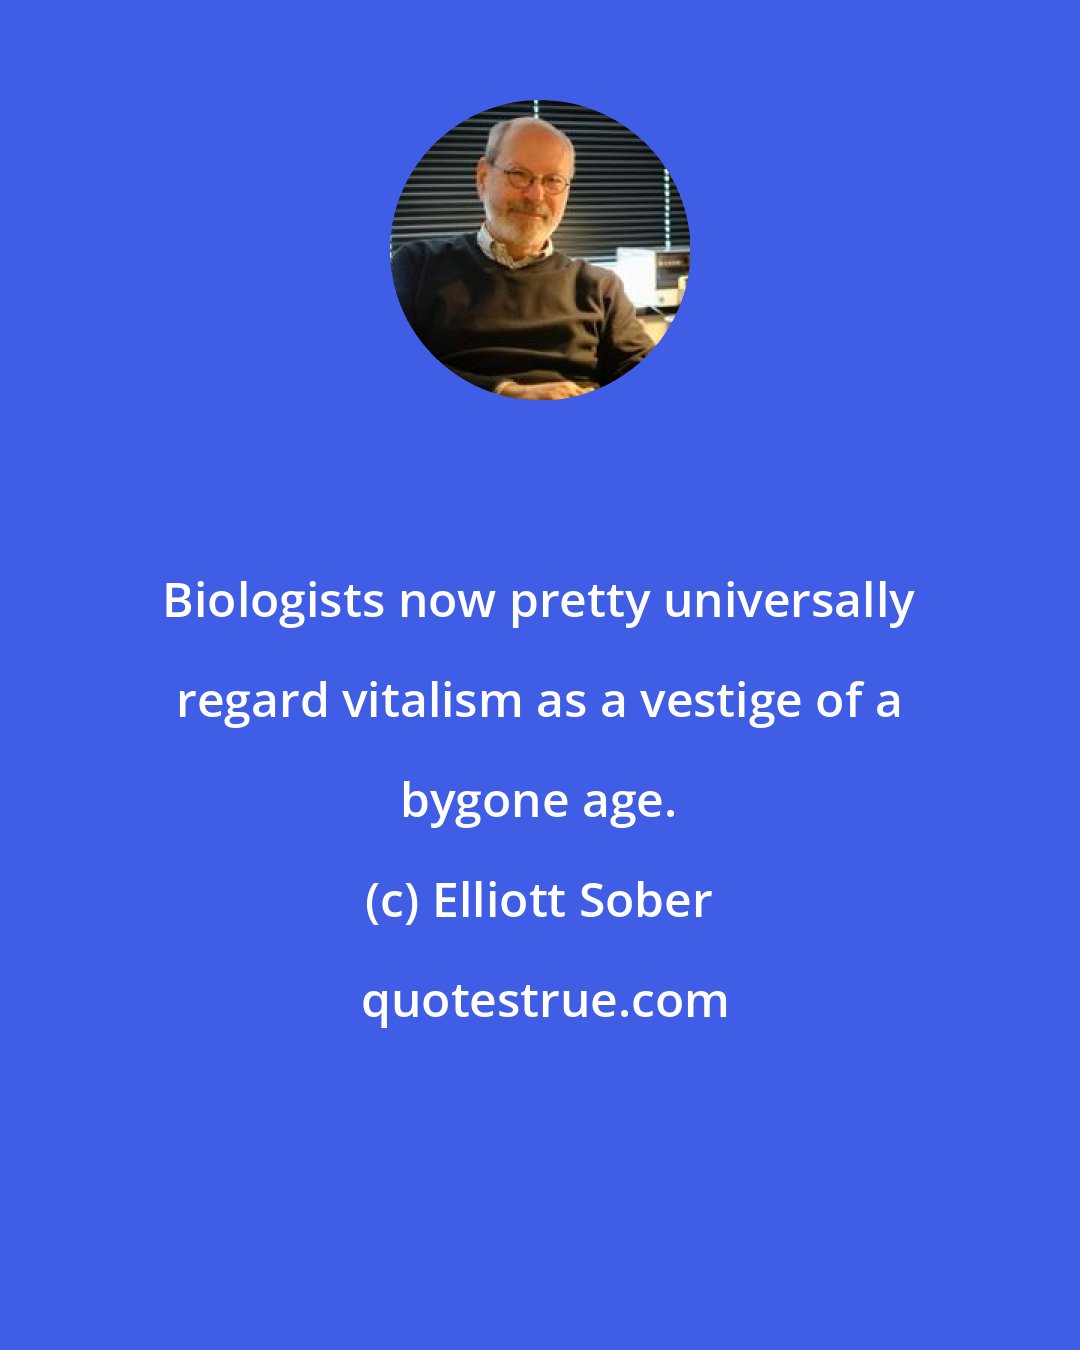 Elliott Sober: Biologists now pretty universally regard vitalism as a vestige of a bygone age.